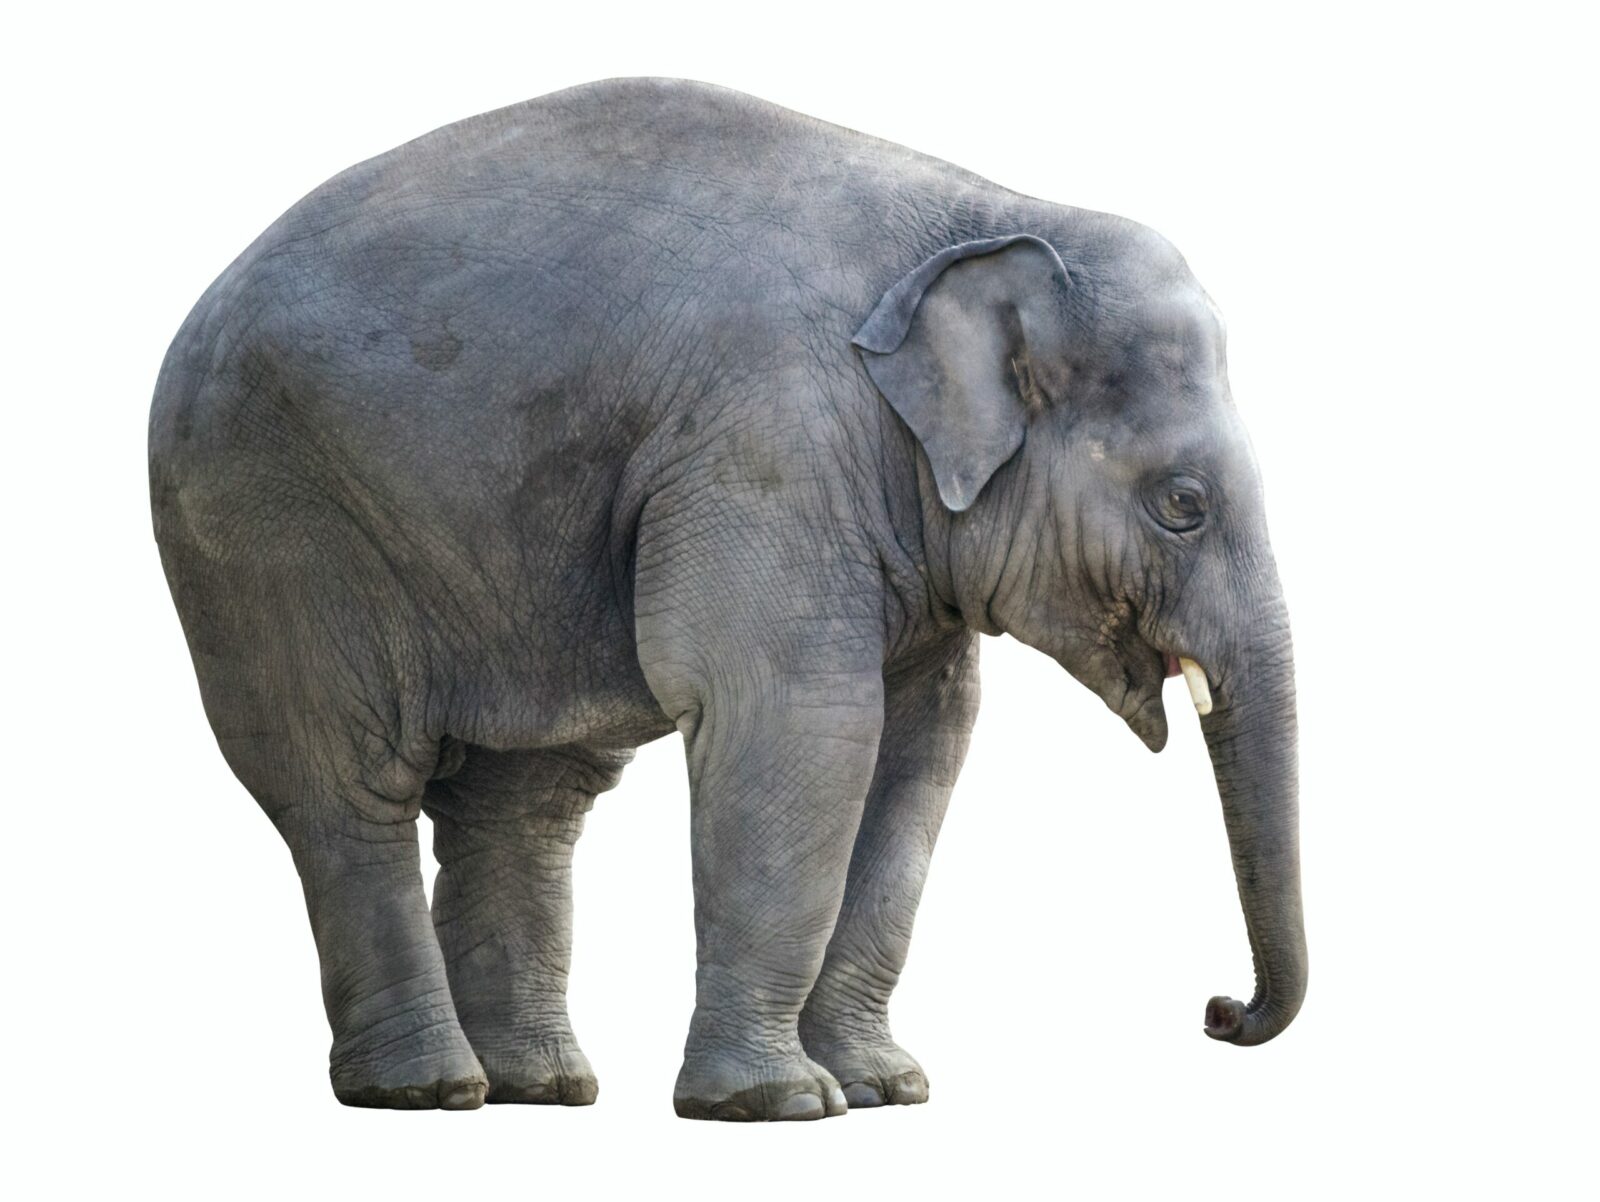 Gray elephant on a white background